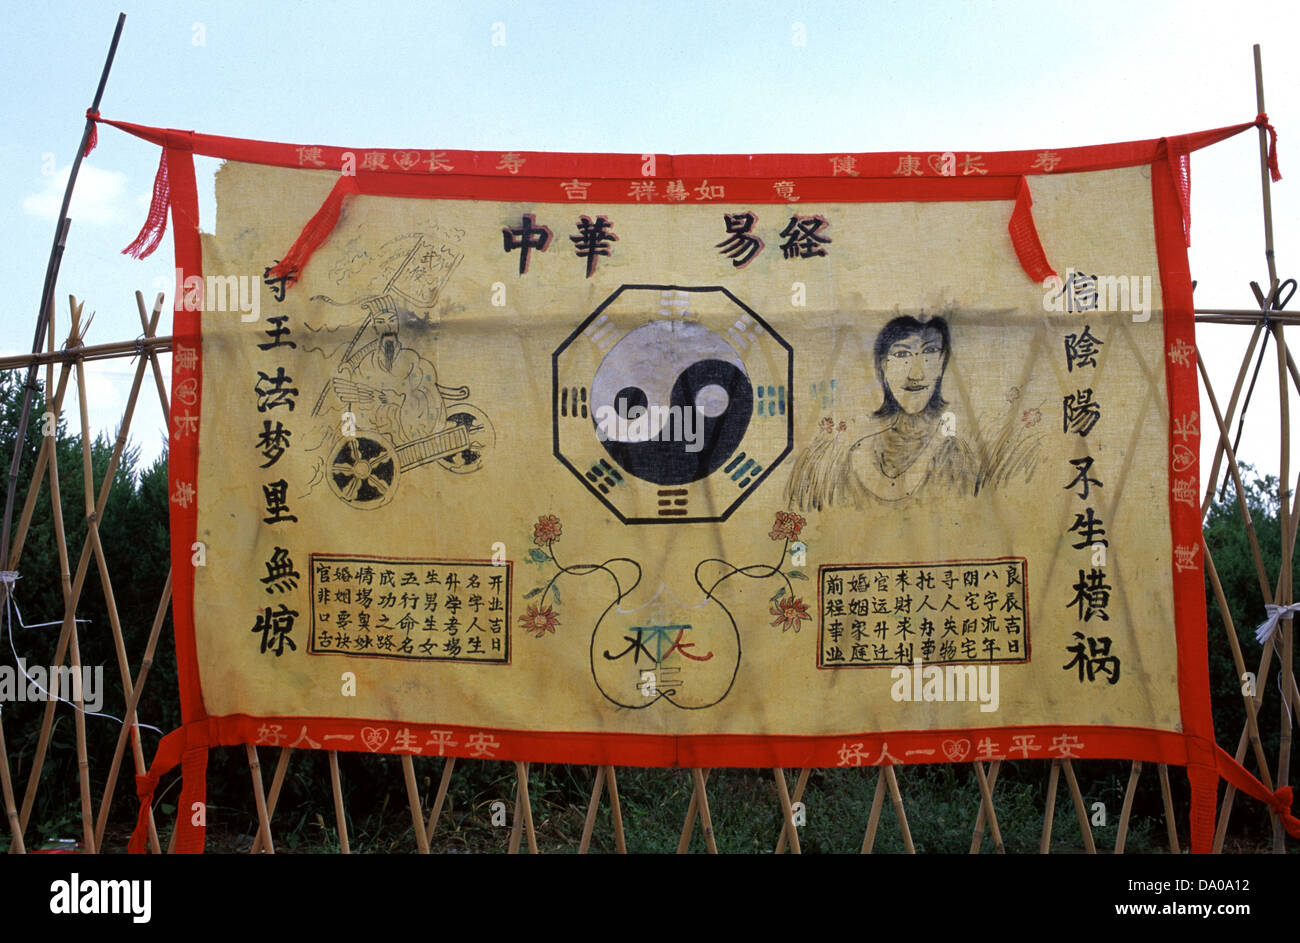 The Ba Gua Ocotagon chart at a fortune teller sign with Bagua ocotagon diagram Yinchuan city Ningxia province China Stock Photo